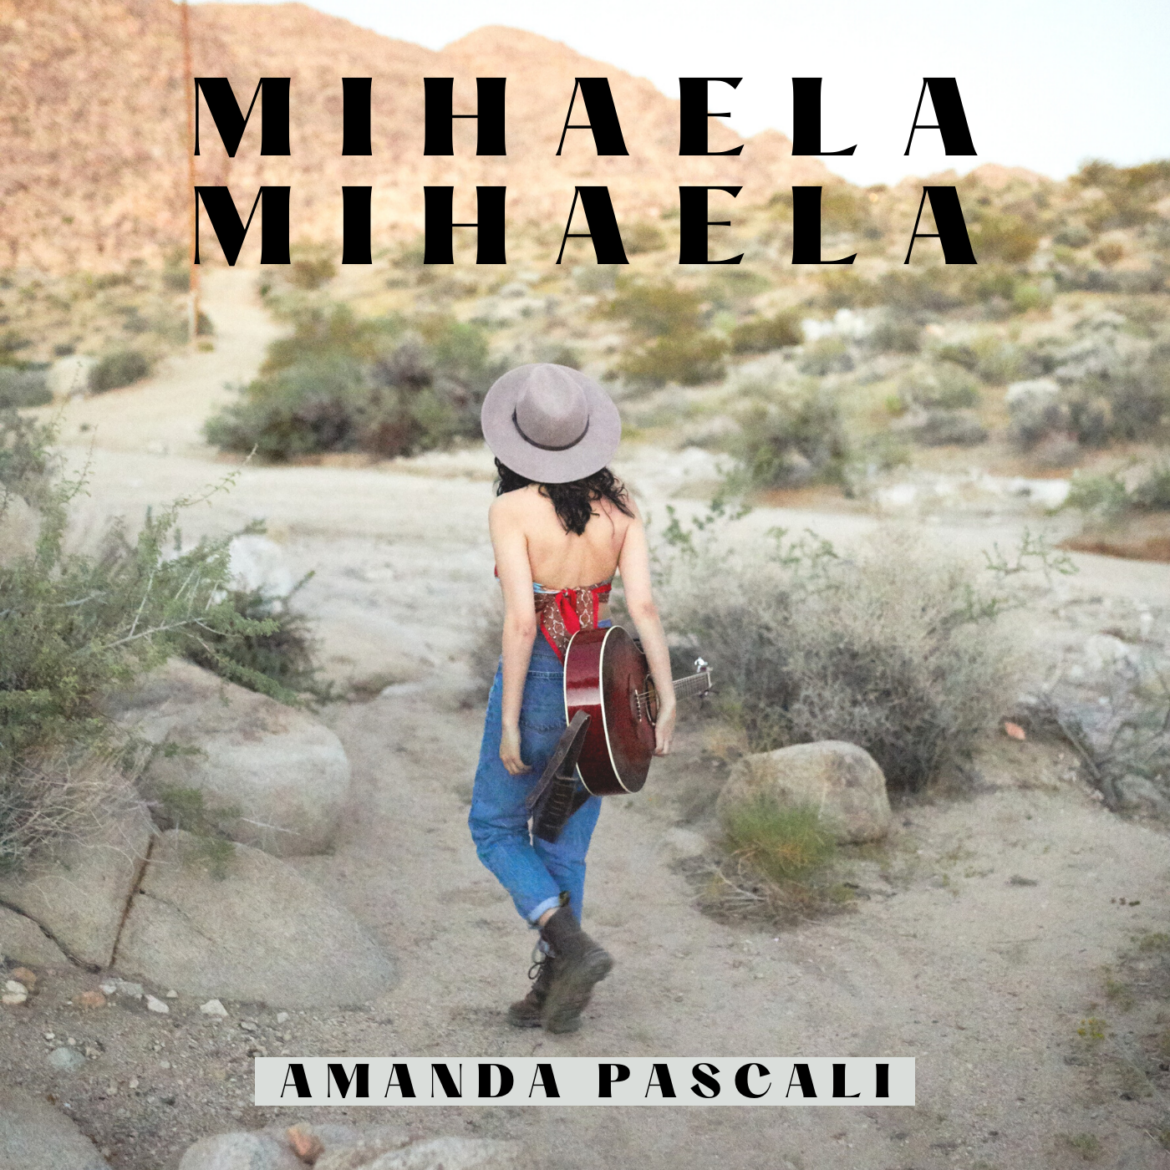 Amanda Pascali’s Releases Genre-Defying Coming Of Age Single “Mihaela Mihaela”